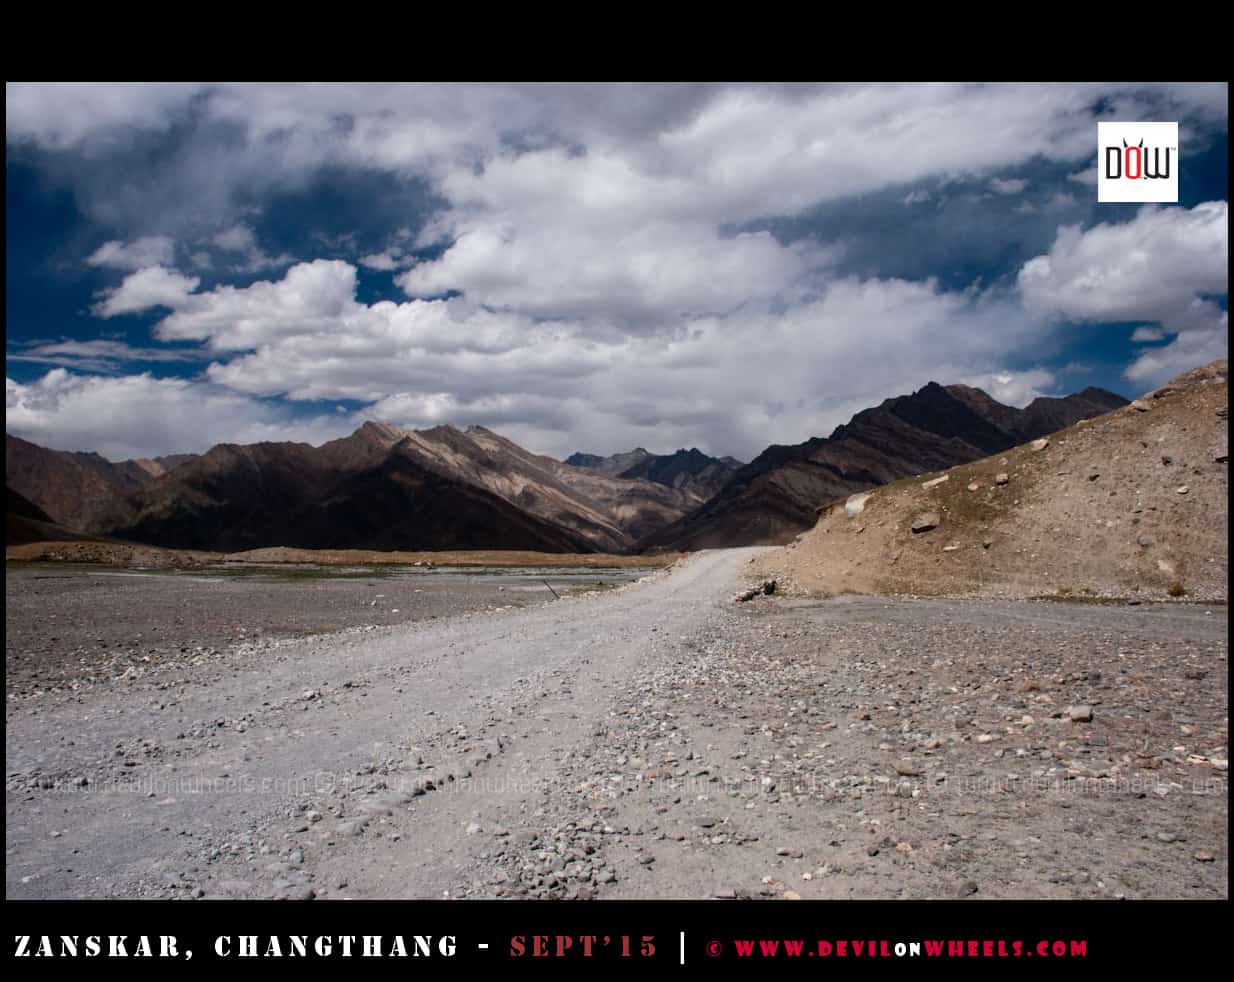 That raw nature in Zanskar Valley